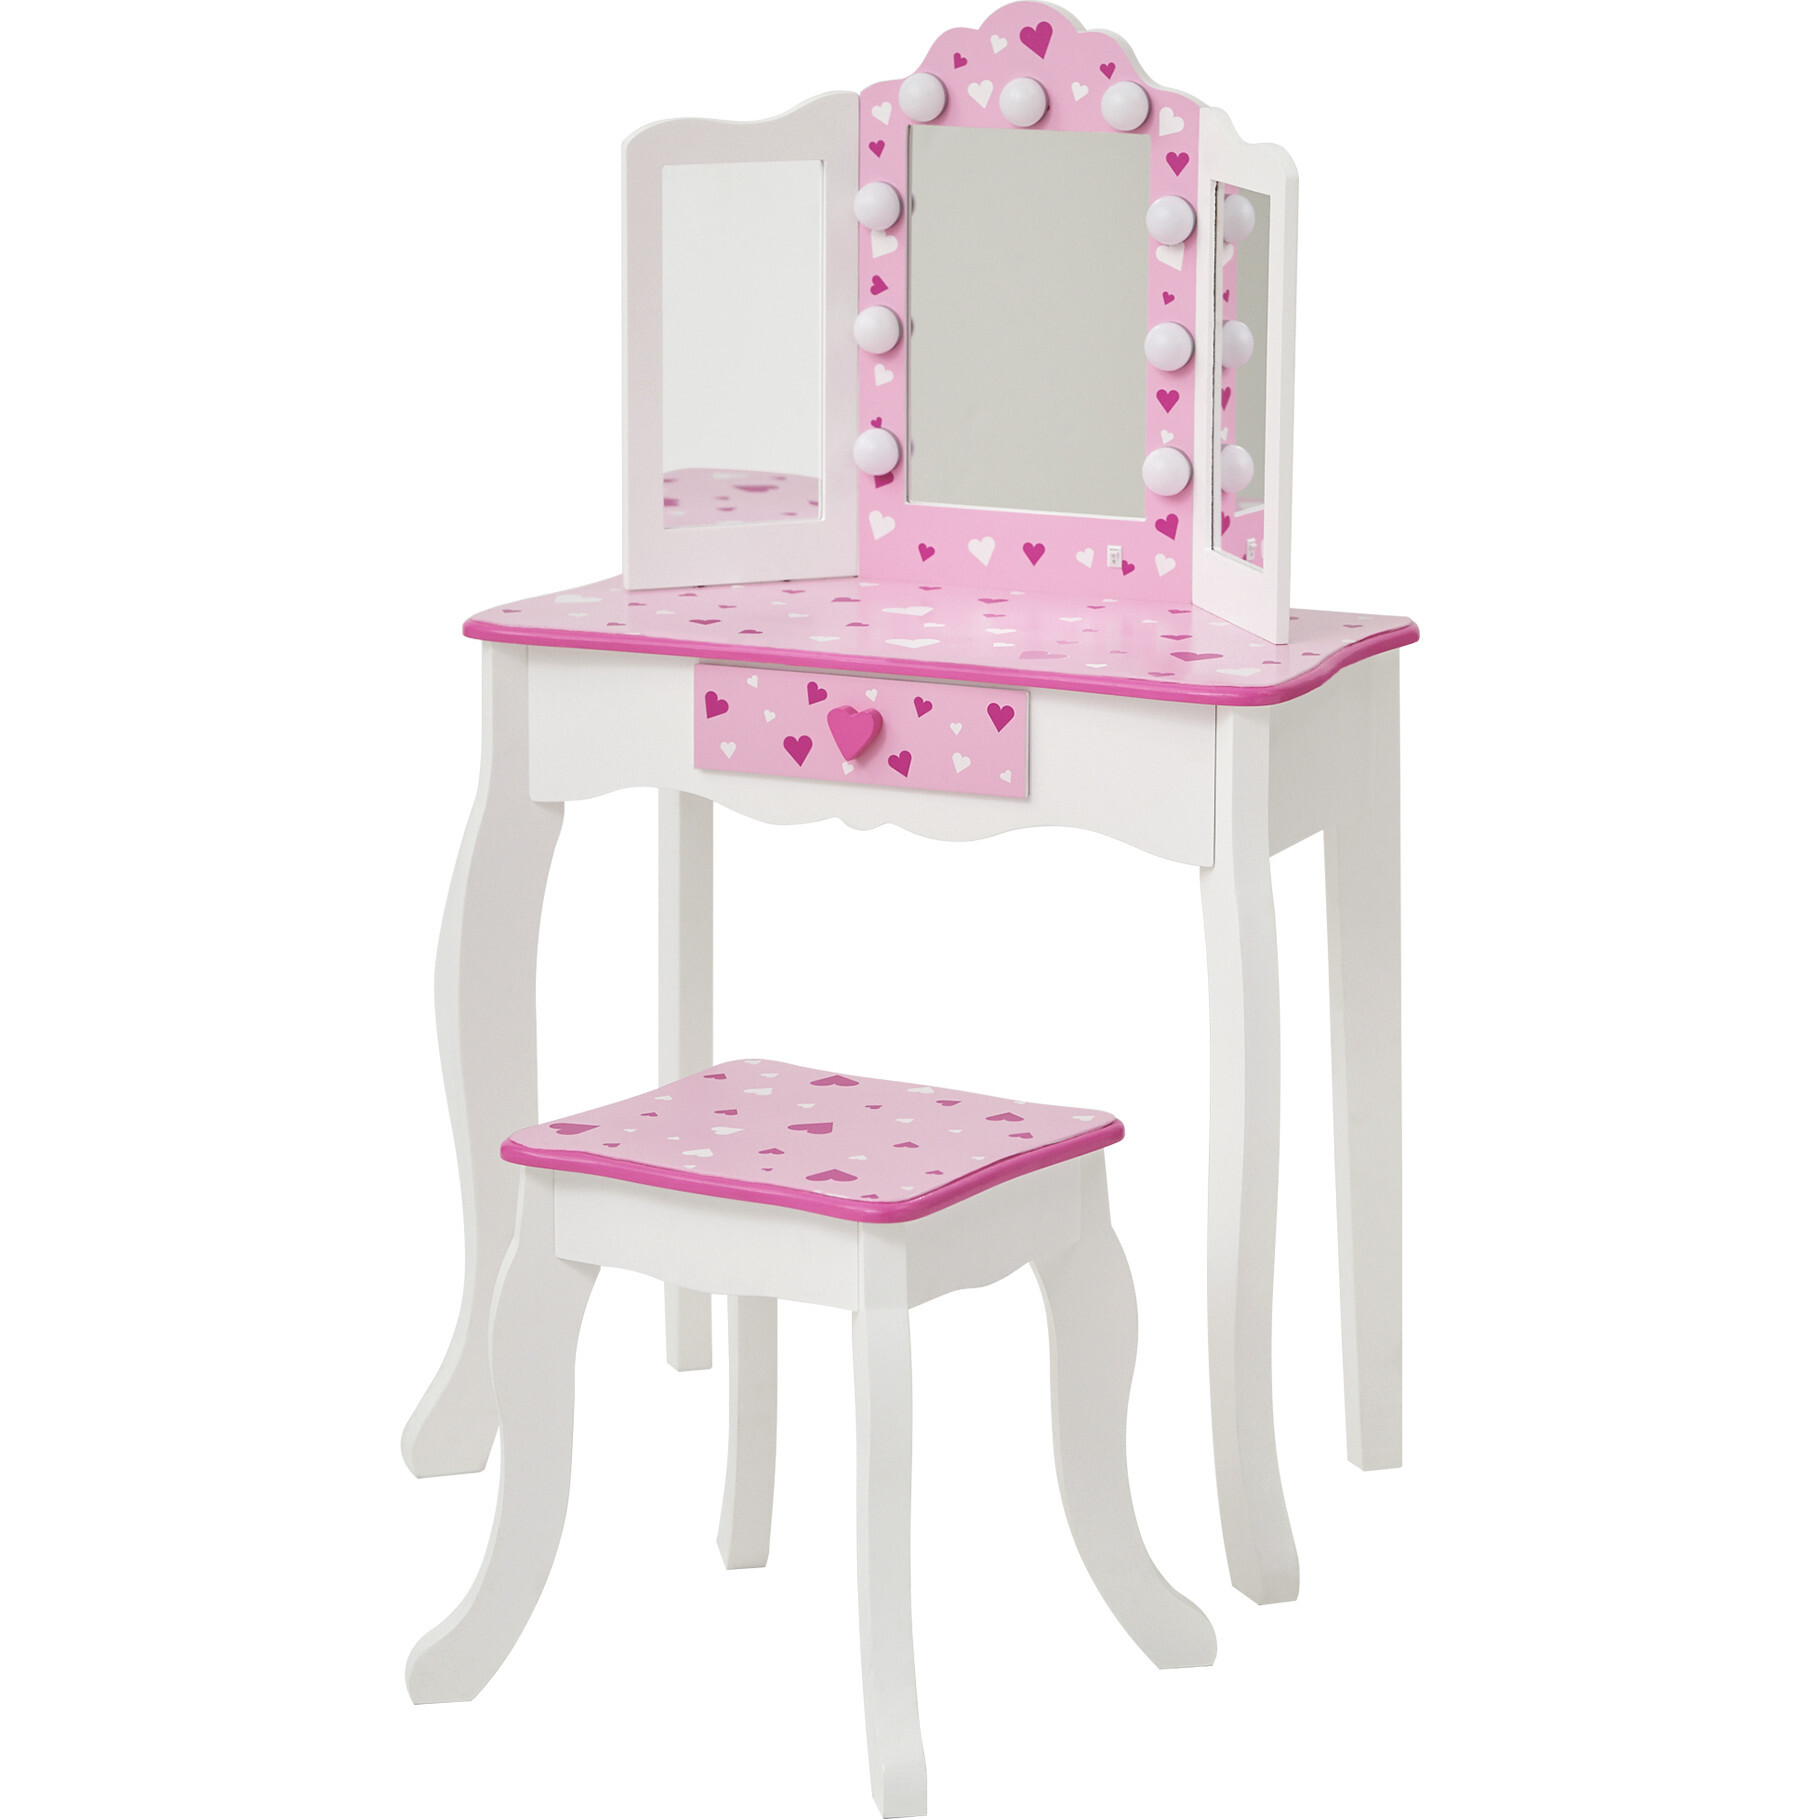 Teamson Kids - Fashion Polka Dot Prints Gisele Play Vanity Set with LED Mirror Light - White / Gold